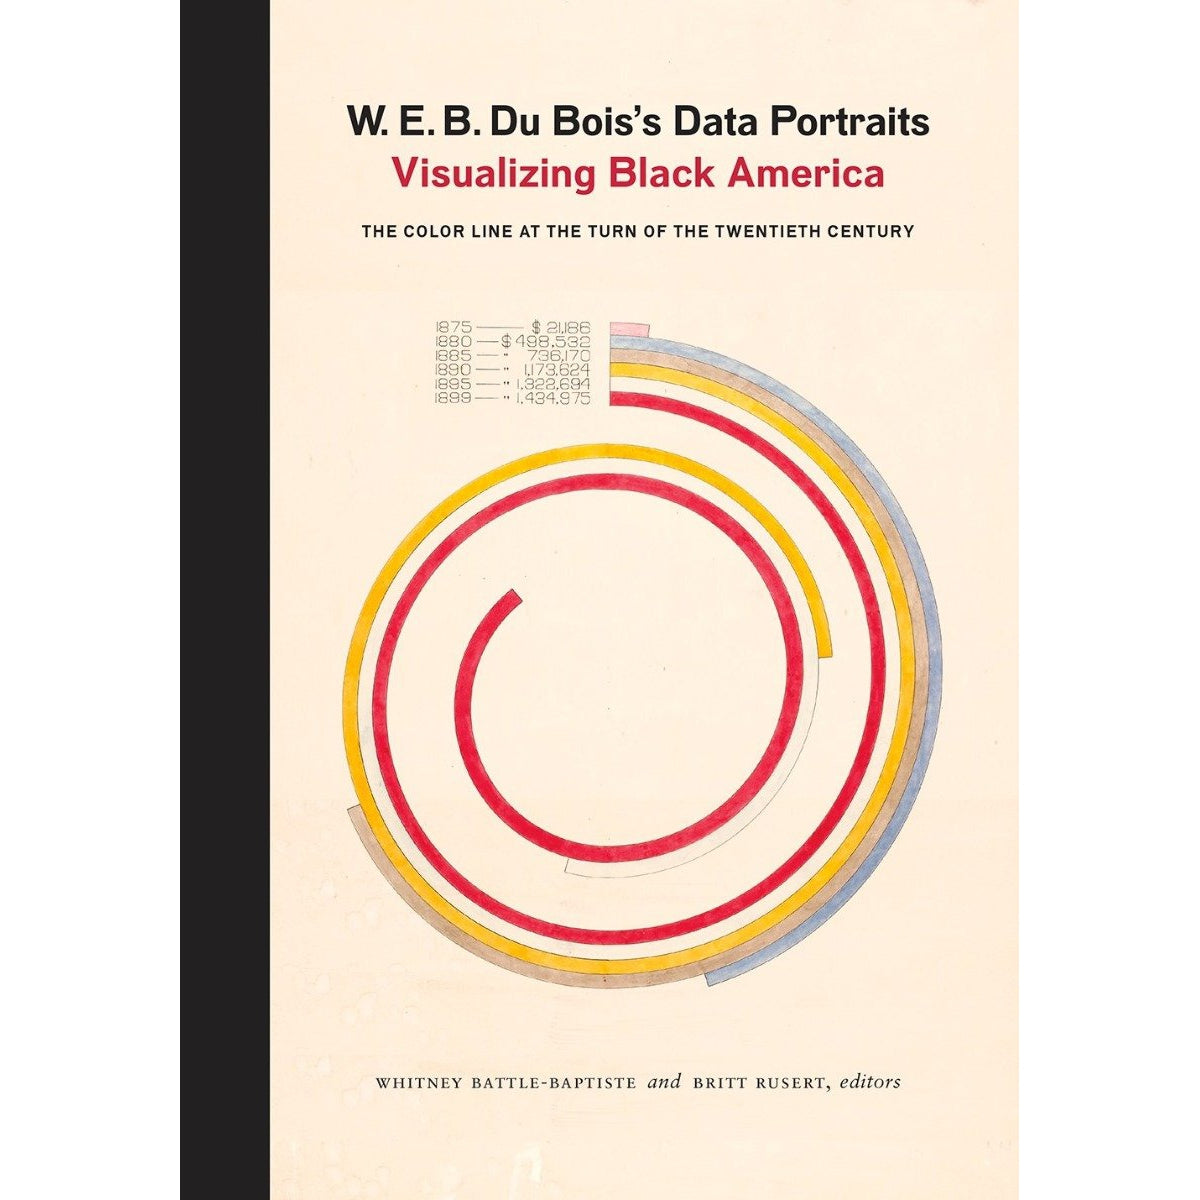 W.E.B. Du Bois Data Portraits: Visualizing Black America's front cover.